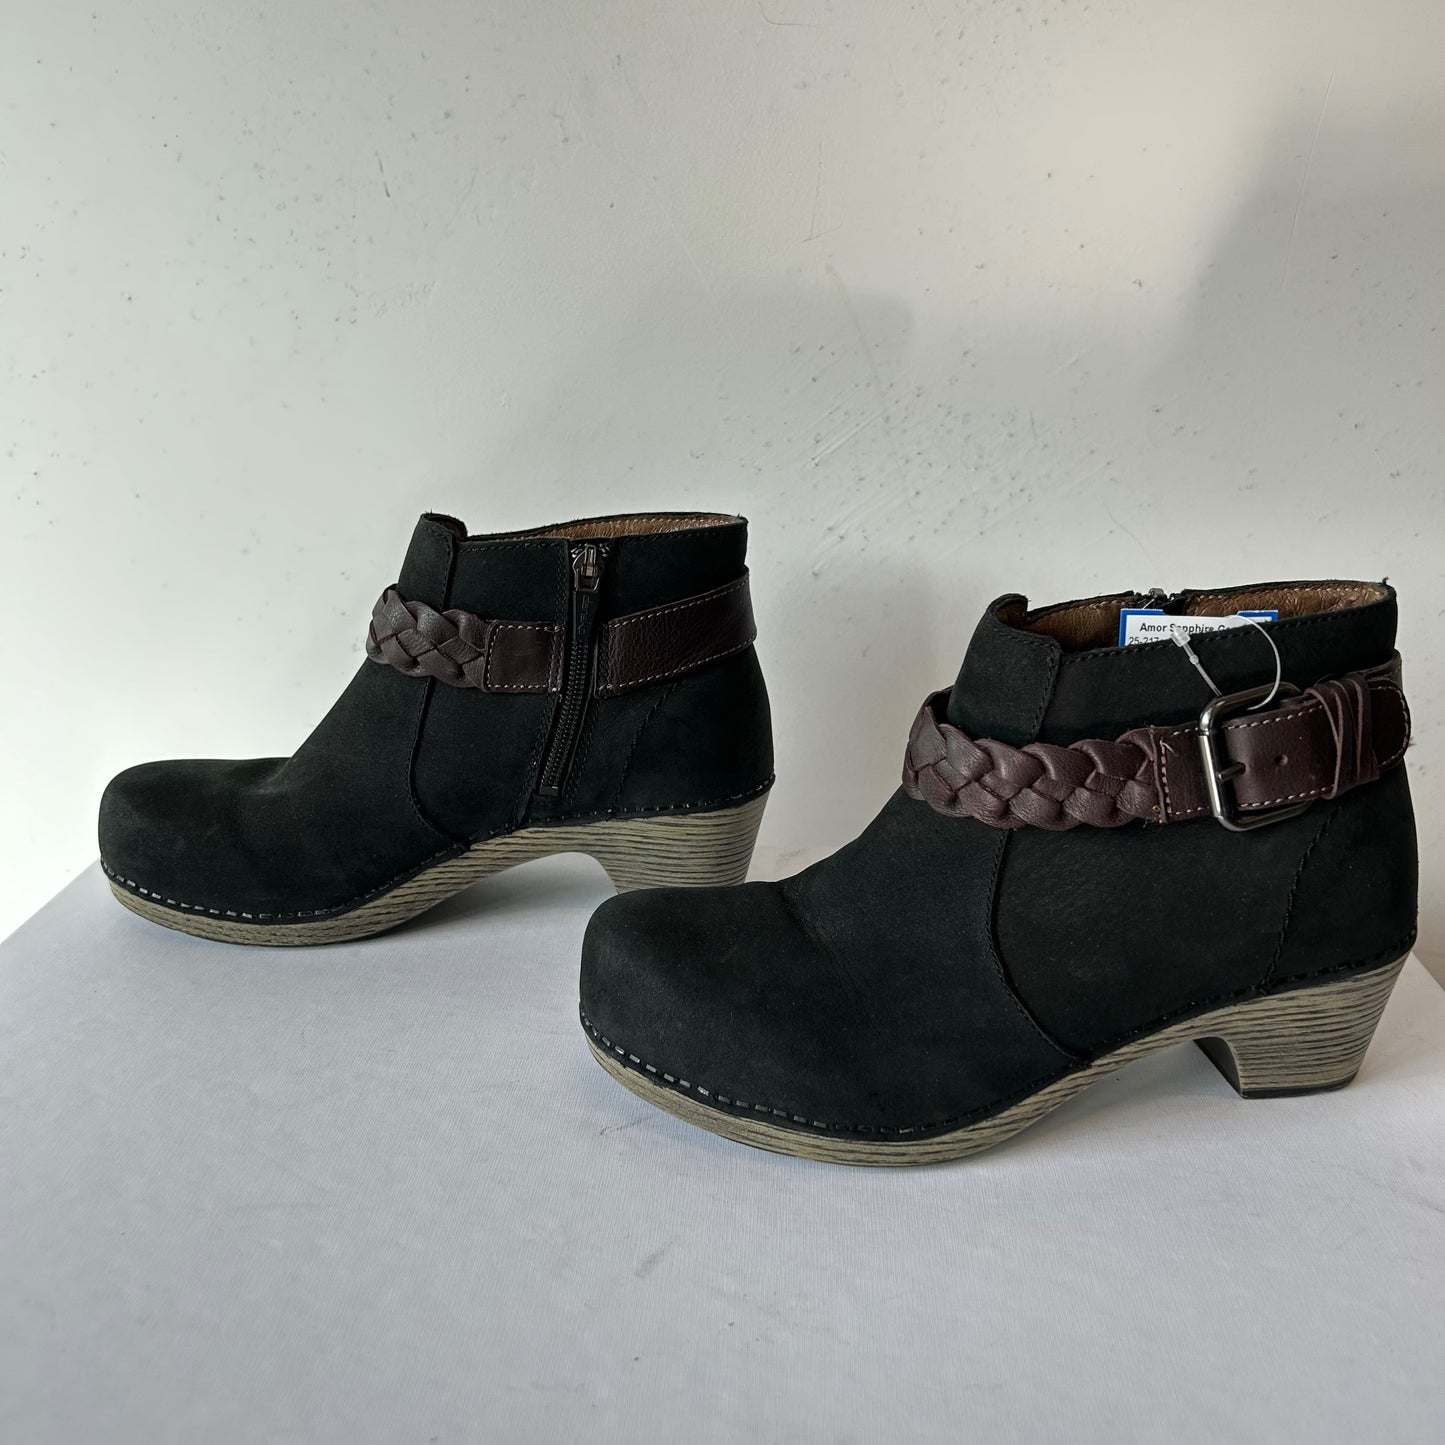 6 Dansko Black Boots